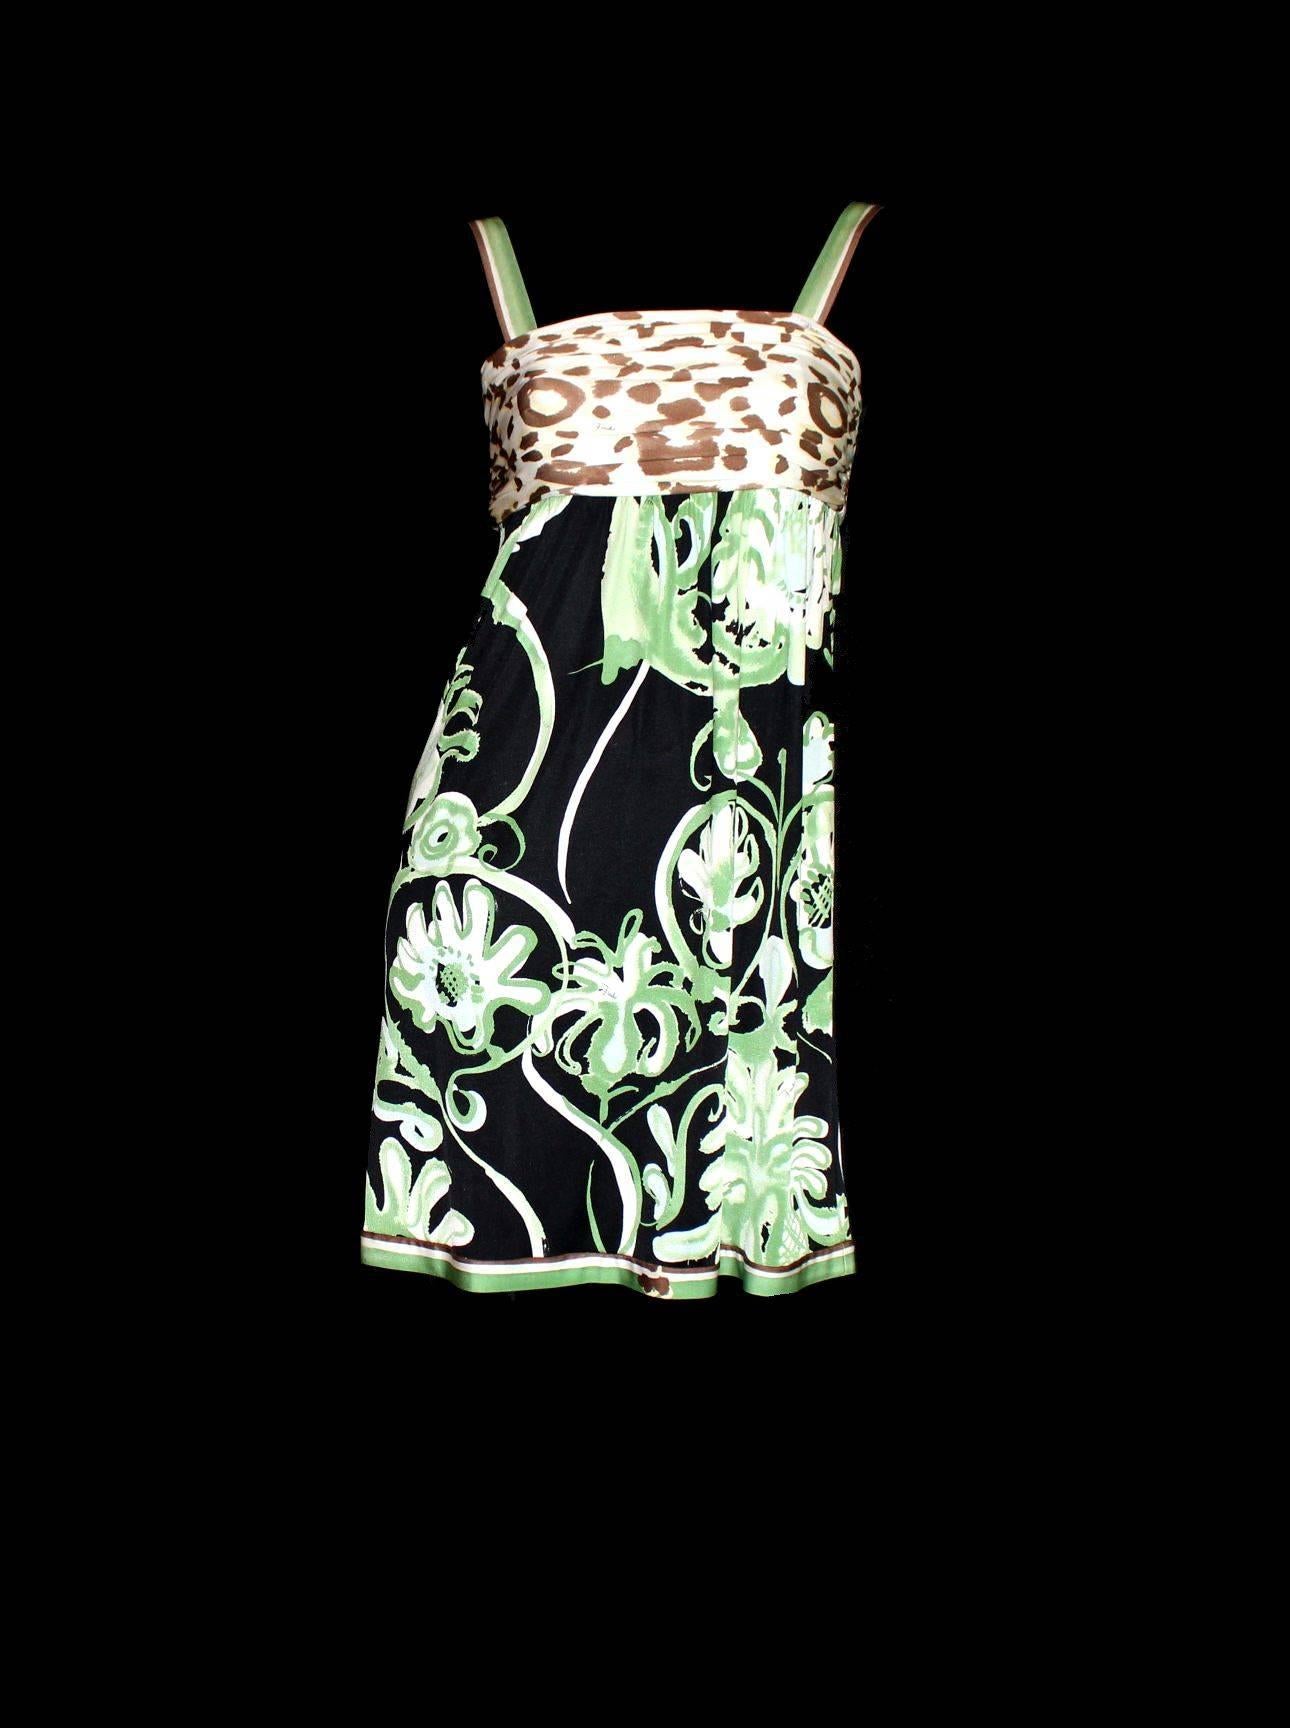 NEW Emilio Pucci Silk Jungle Cheetah Animal Floral Botanical Print Dress 40 For Sale 1